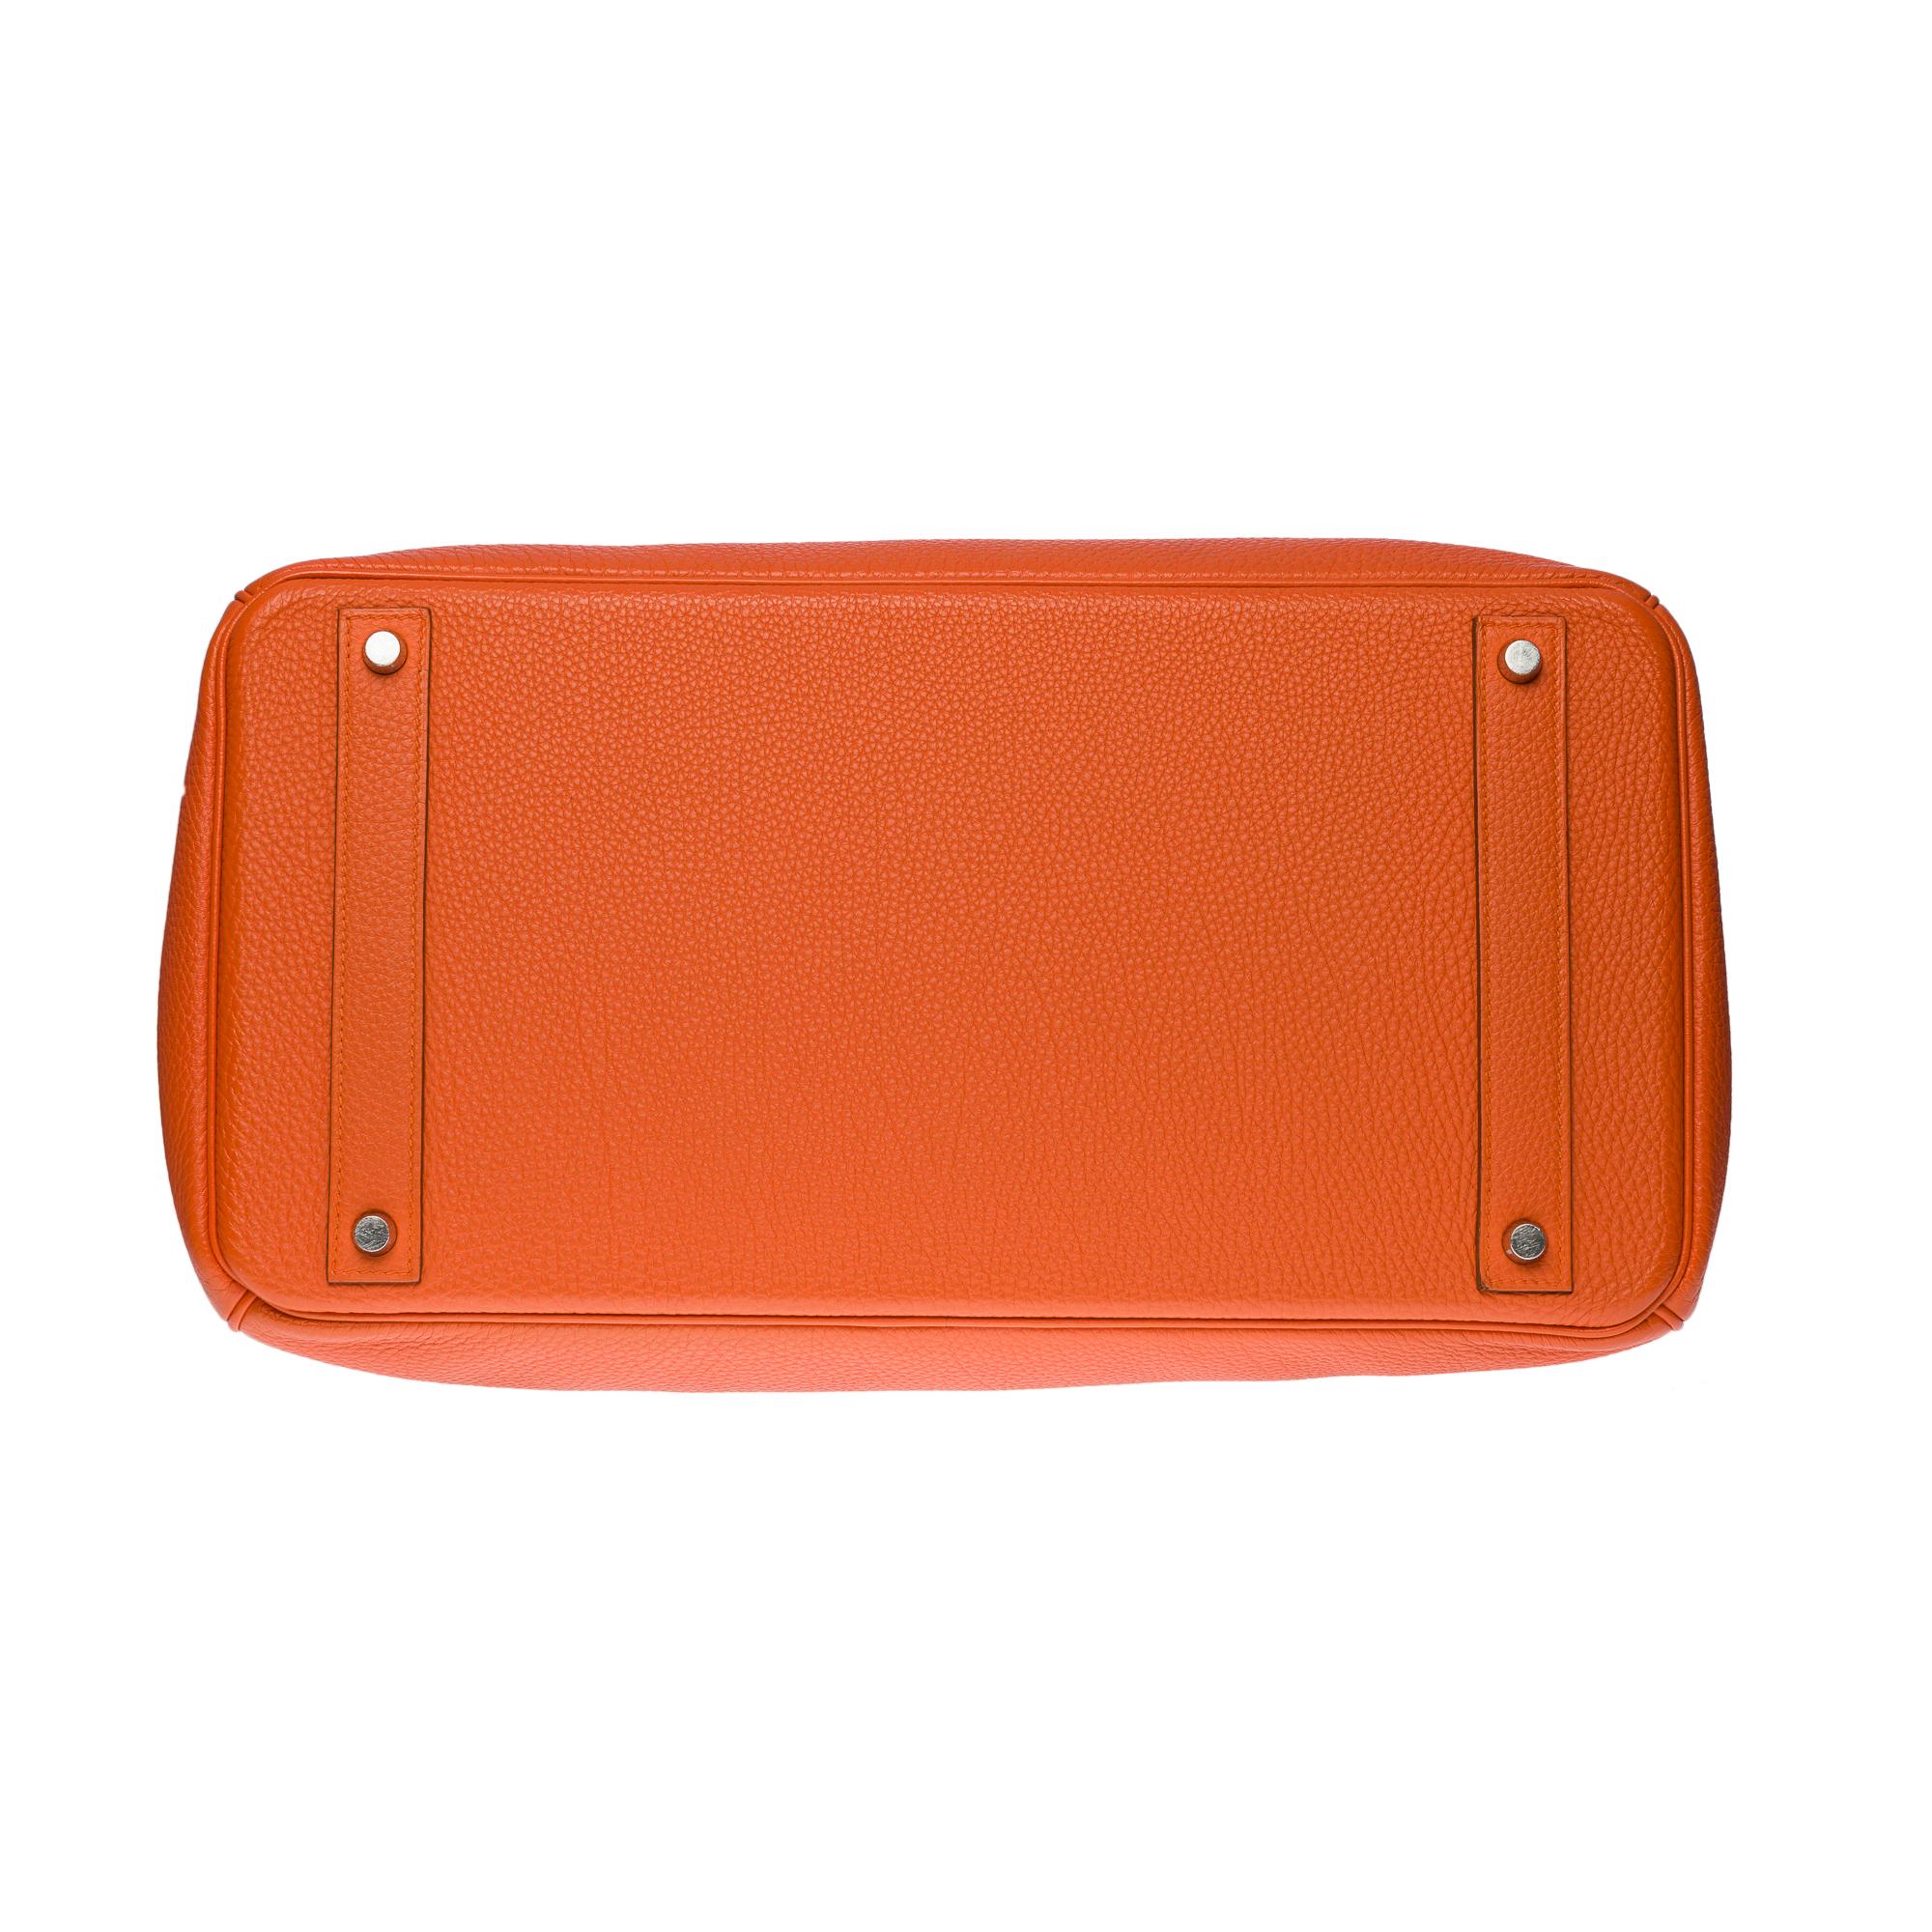 Stunning Hermes Birkin 40cm handbag in Orange Terre battue Togo leather, SHW 6